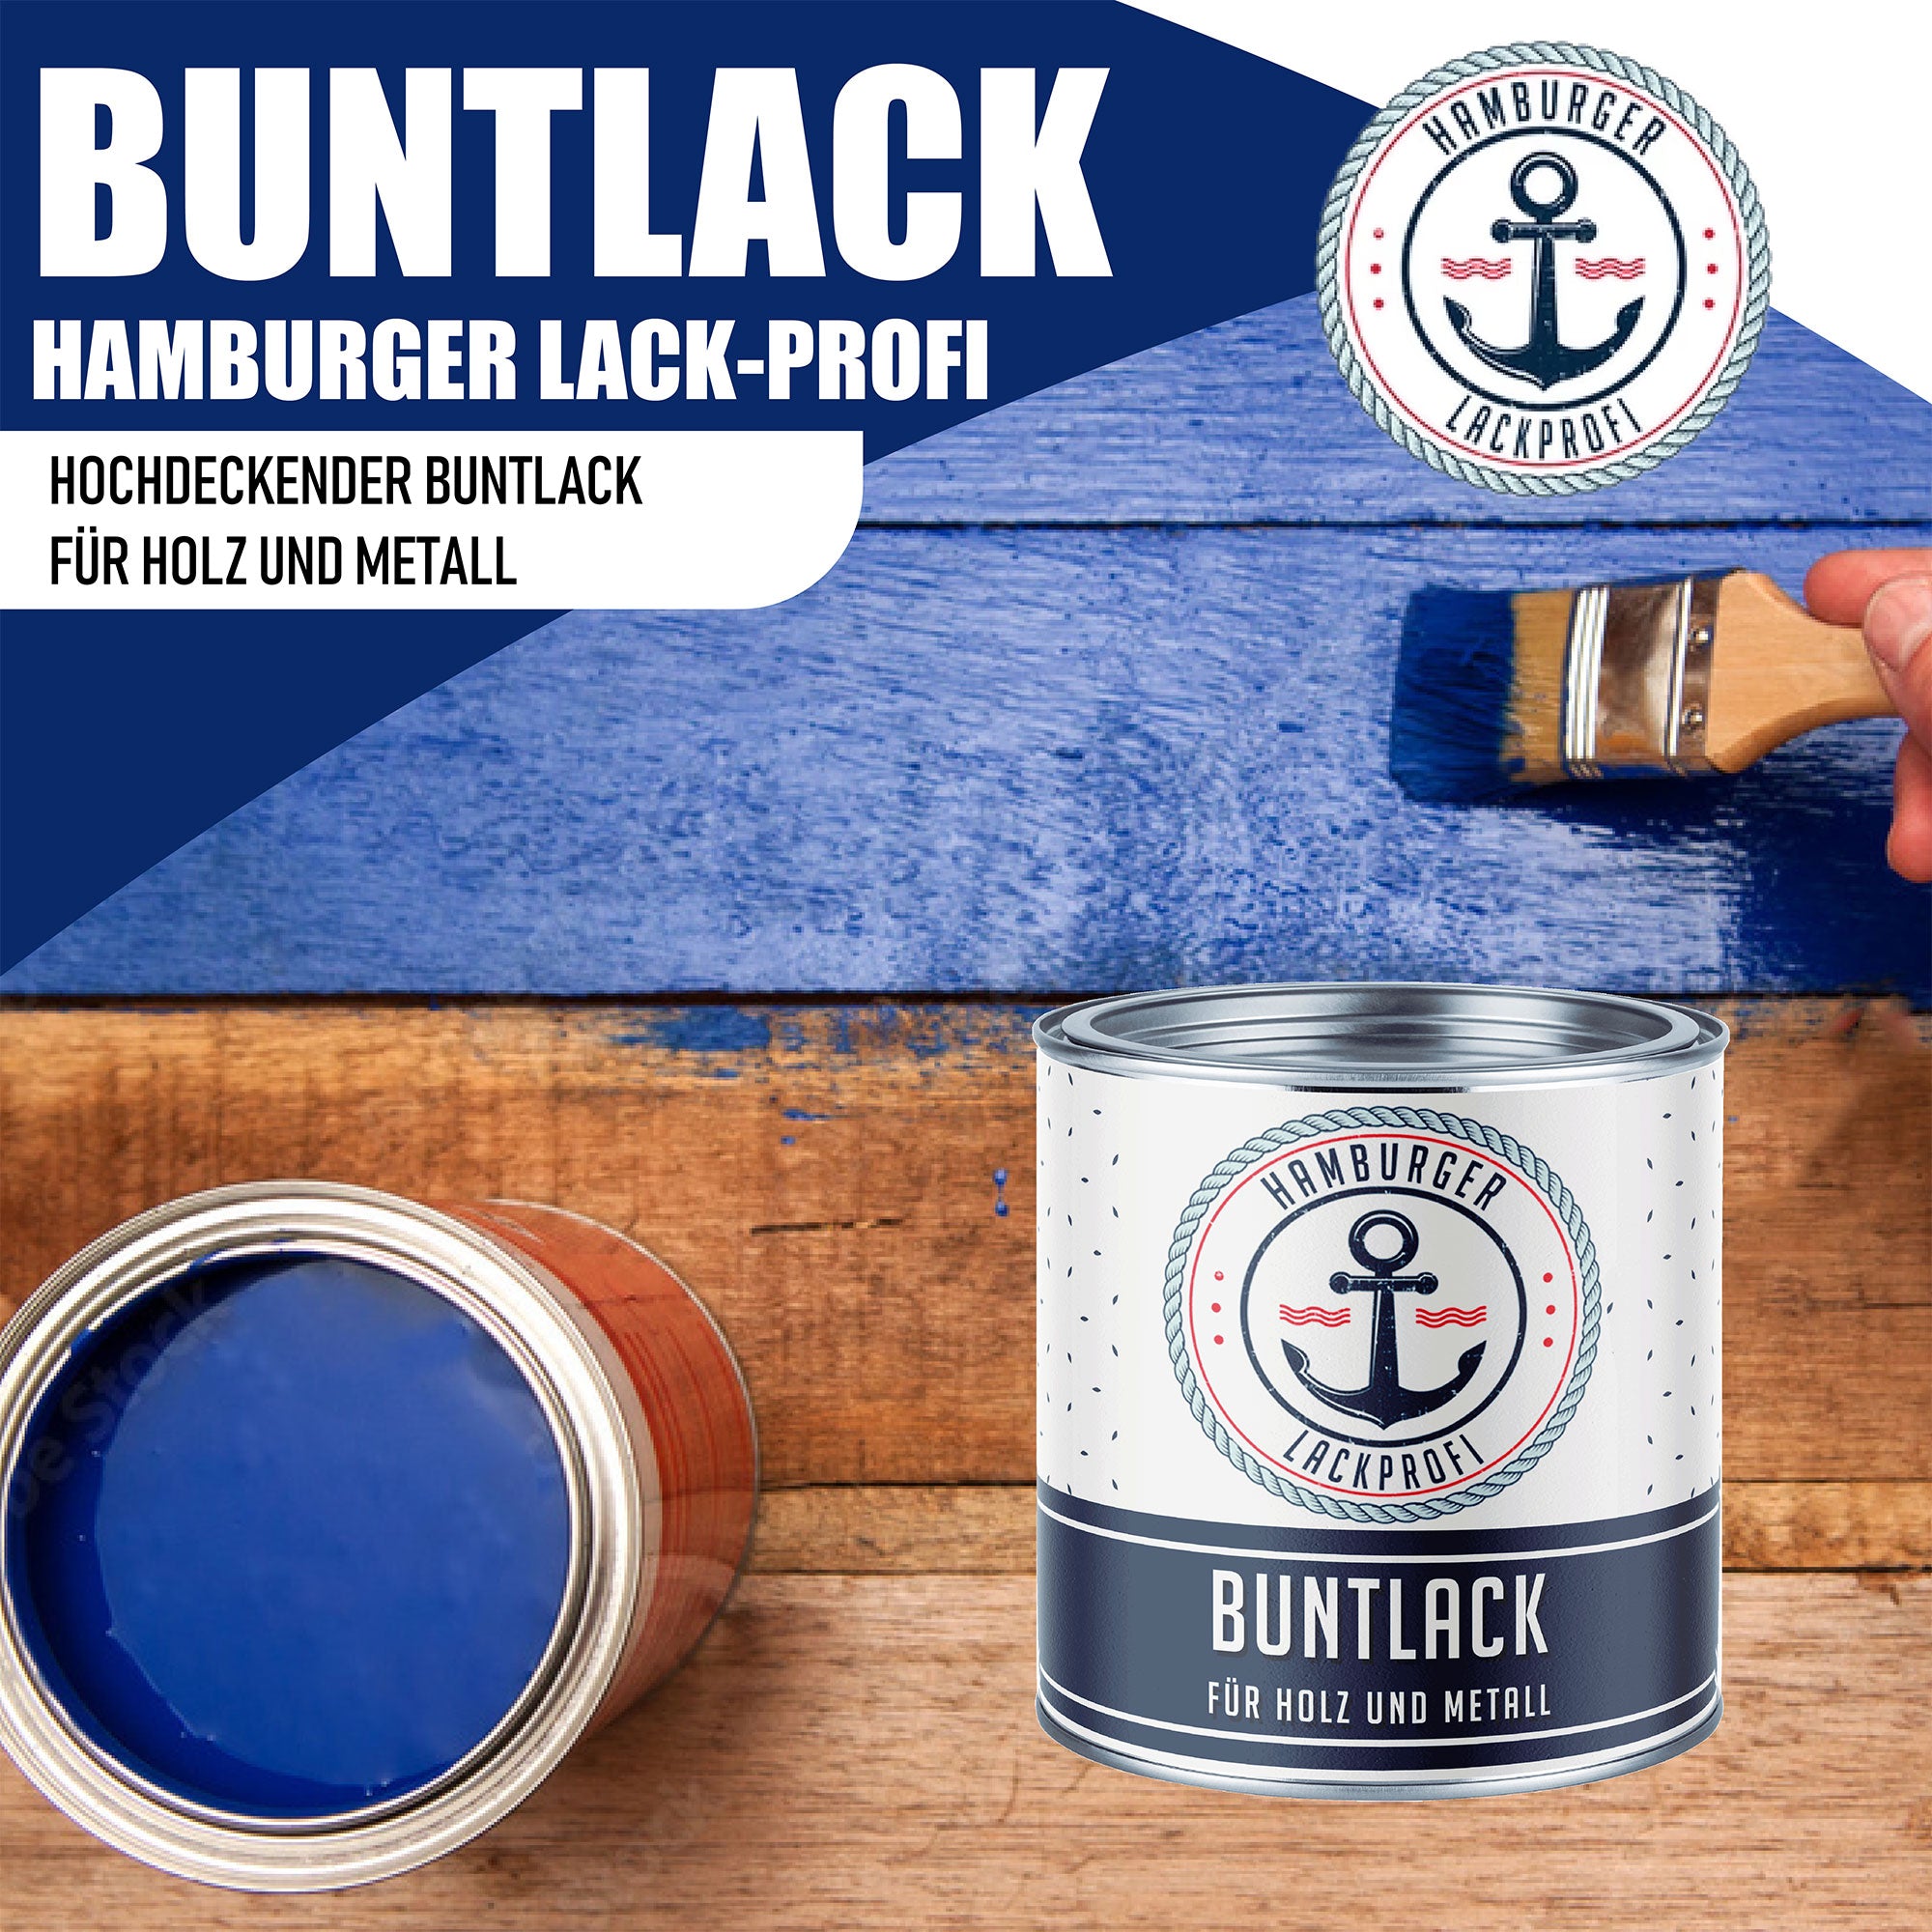 Hamburger Lack-Profi Buntlack Feuerrot RAL 3000 - Robuster Kunstharzlack